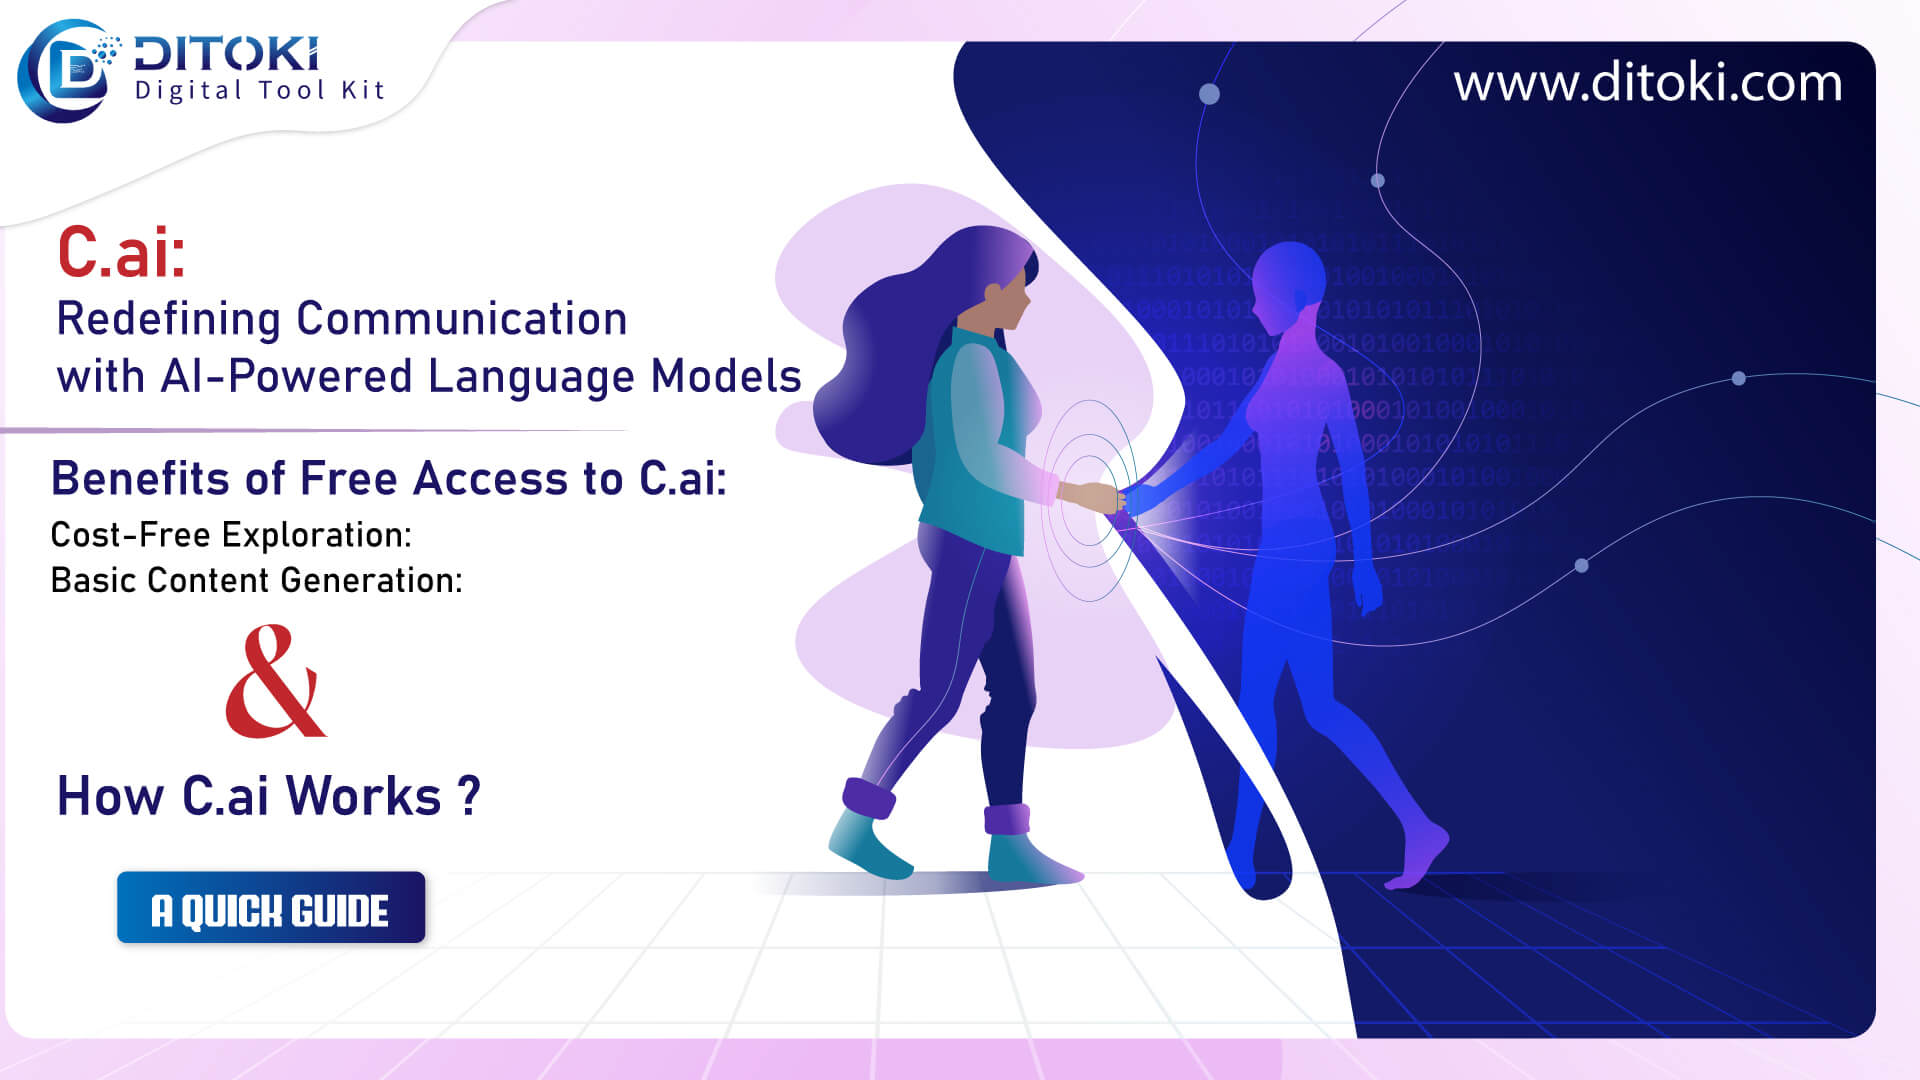 C.ai Redefining Communication with AI-Powered Language Models